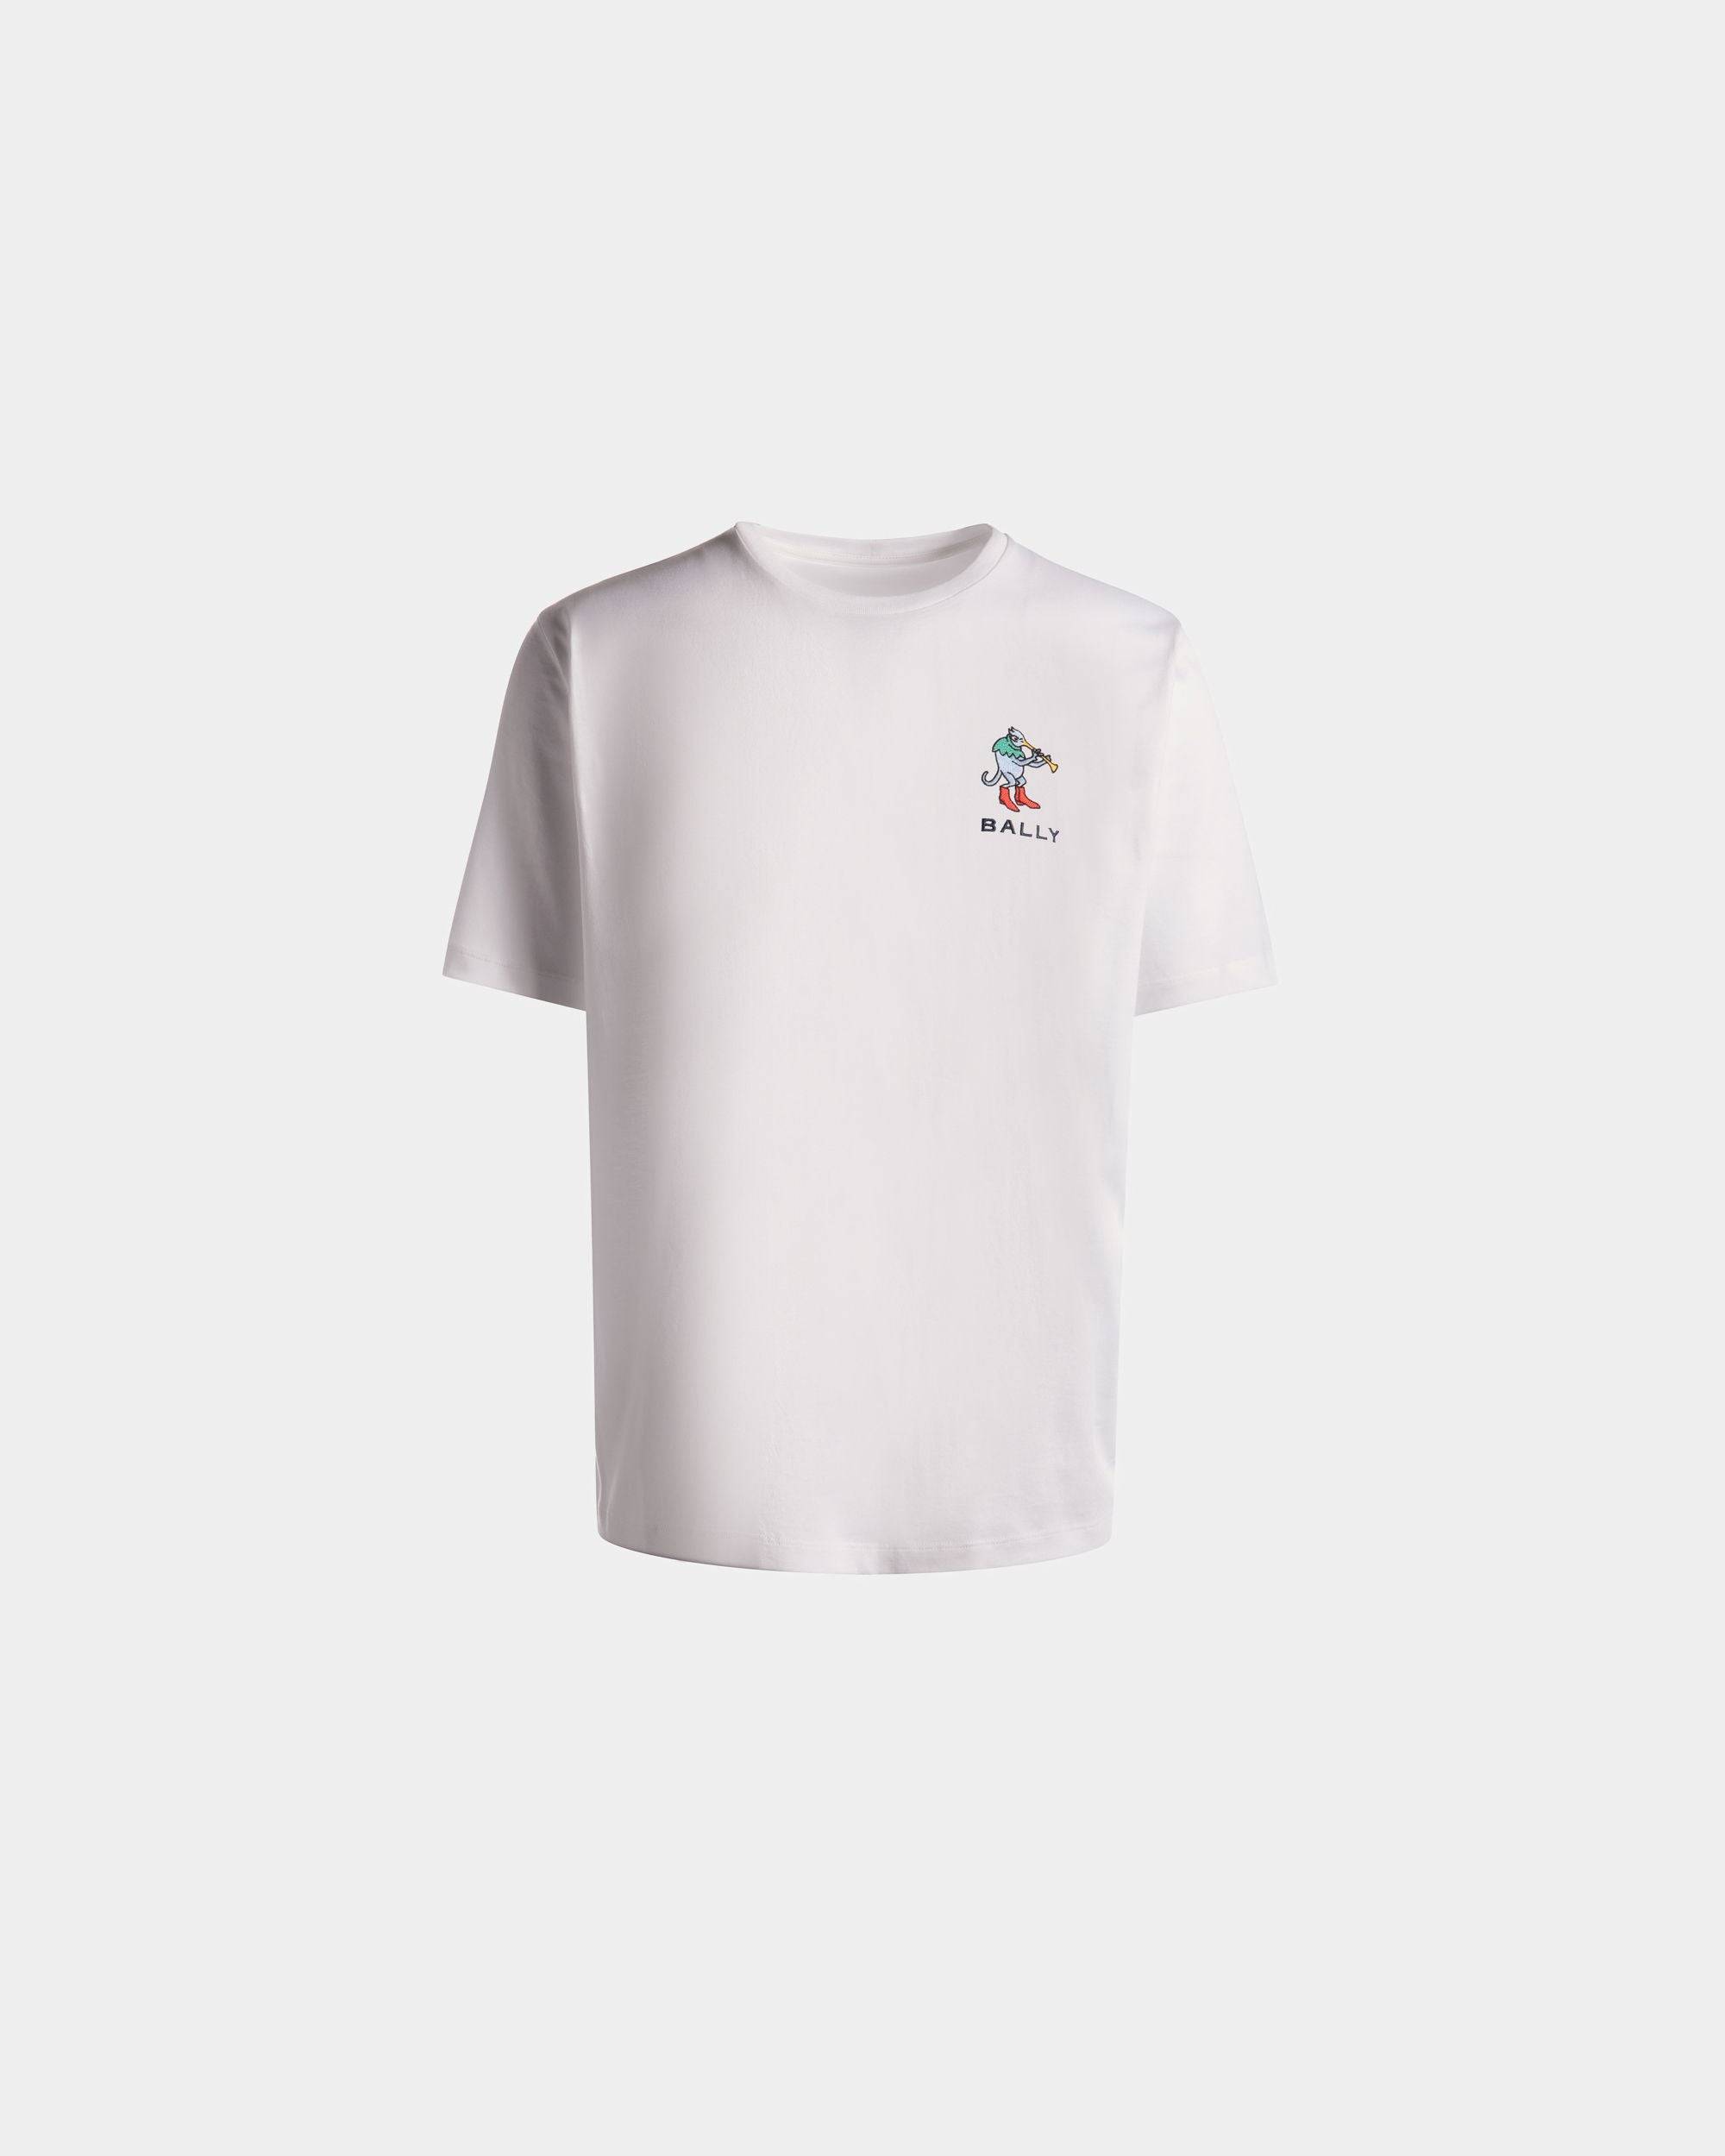 Men's Sartorial Shirts, T-Shirts & Polo Shirts